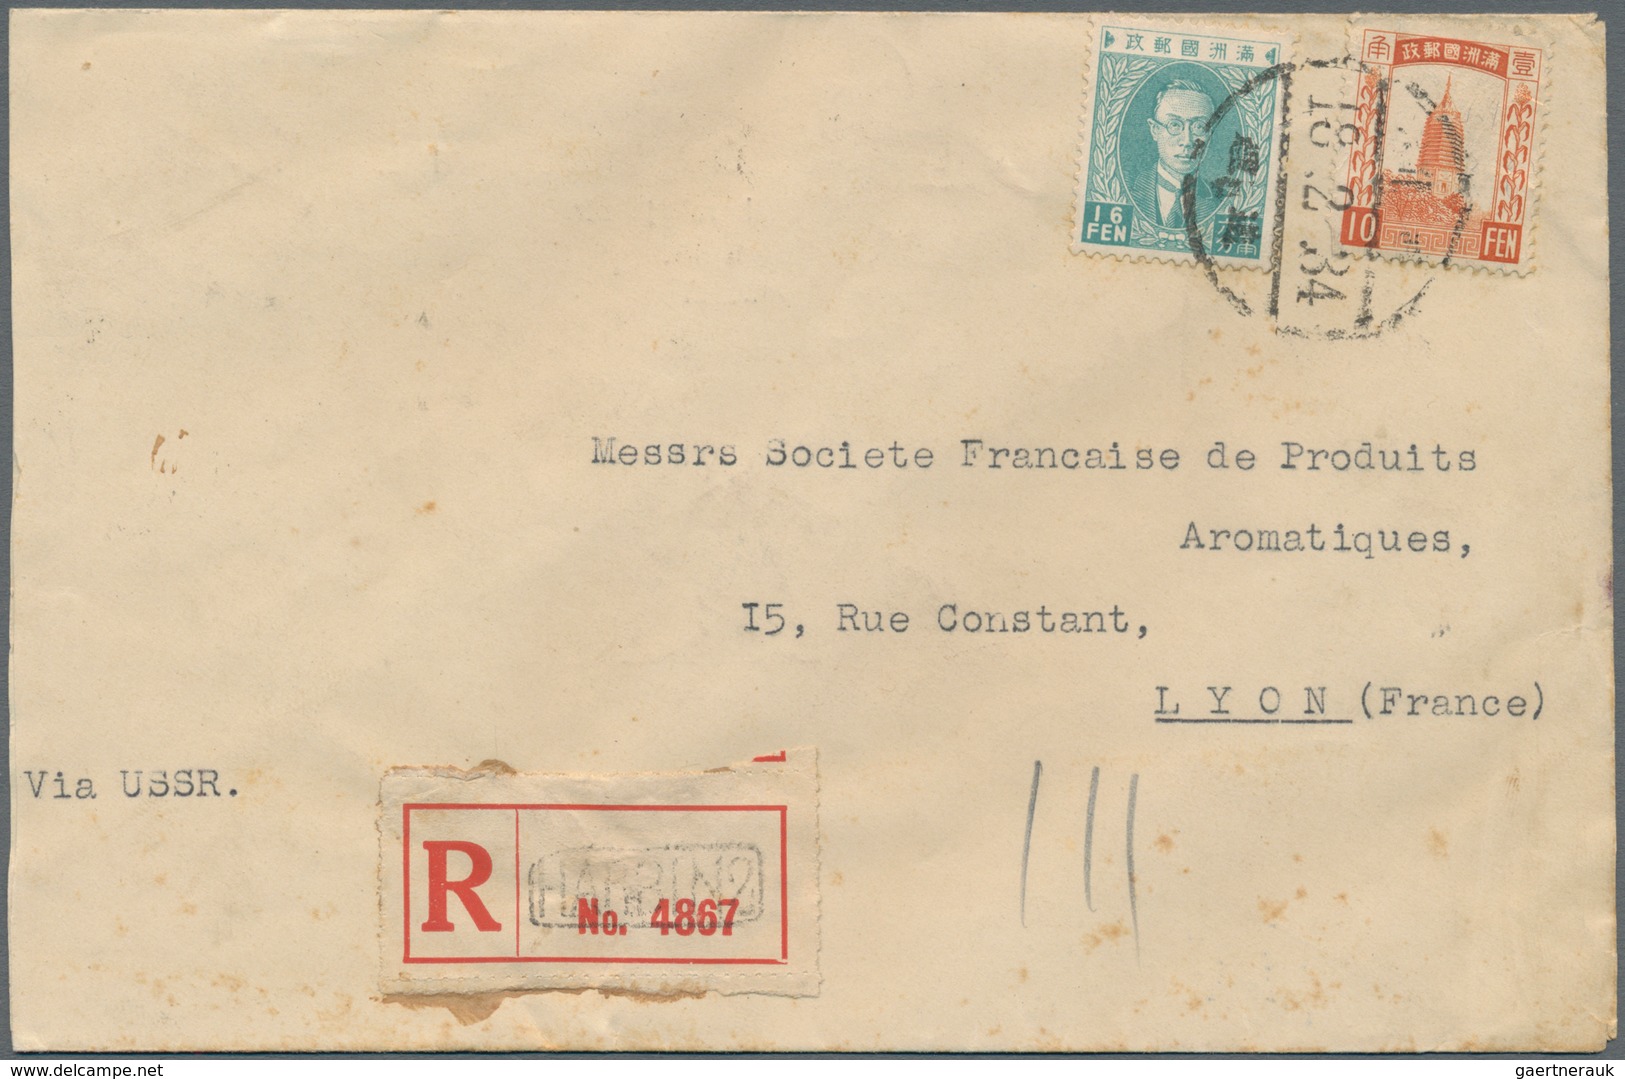 Mandschuko (Manchuko): 1934. Registered Envelope Addressed To France Bearing SG 11, 10f Orange And S - 1932-45 Manchuria (Manchukuo)